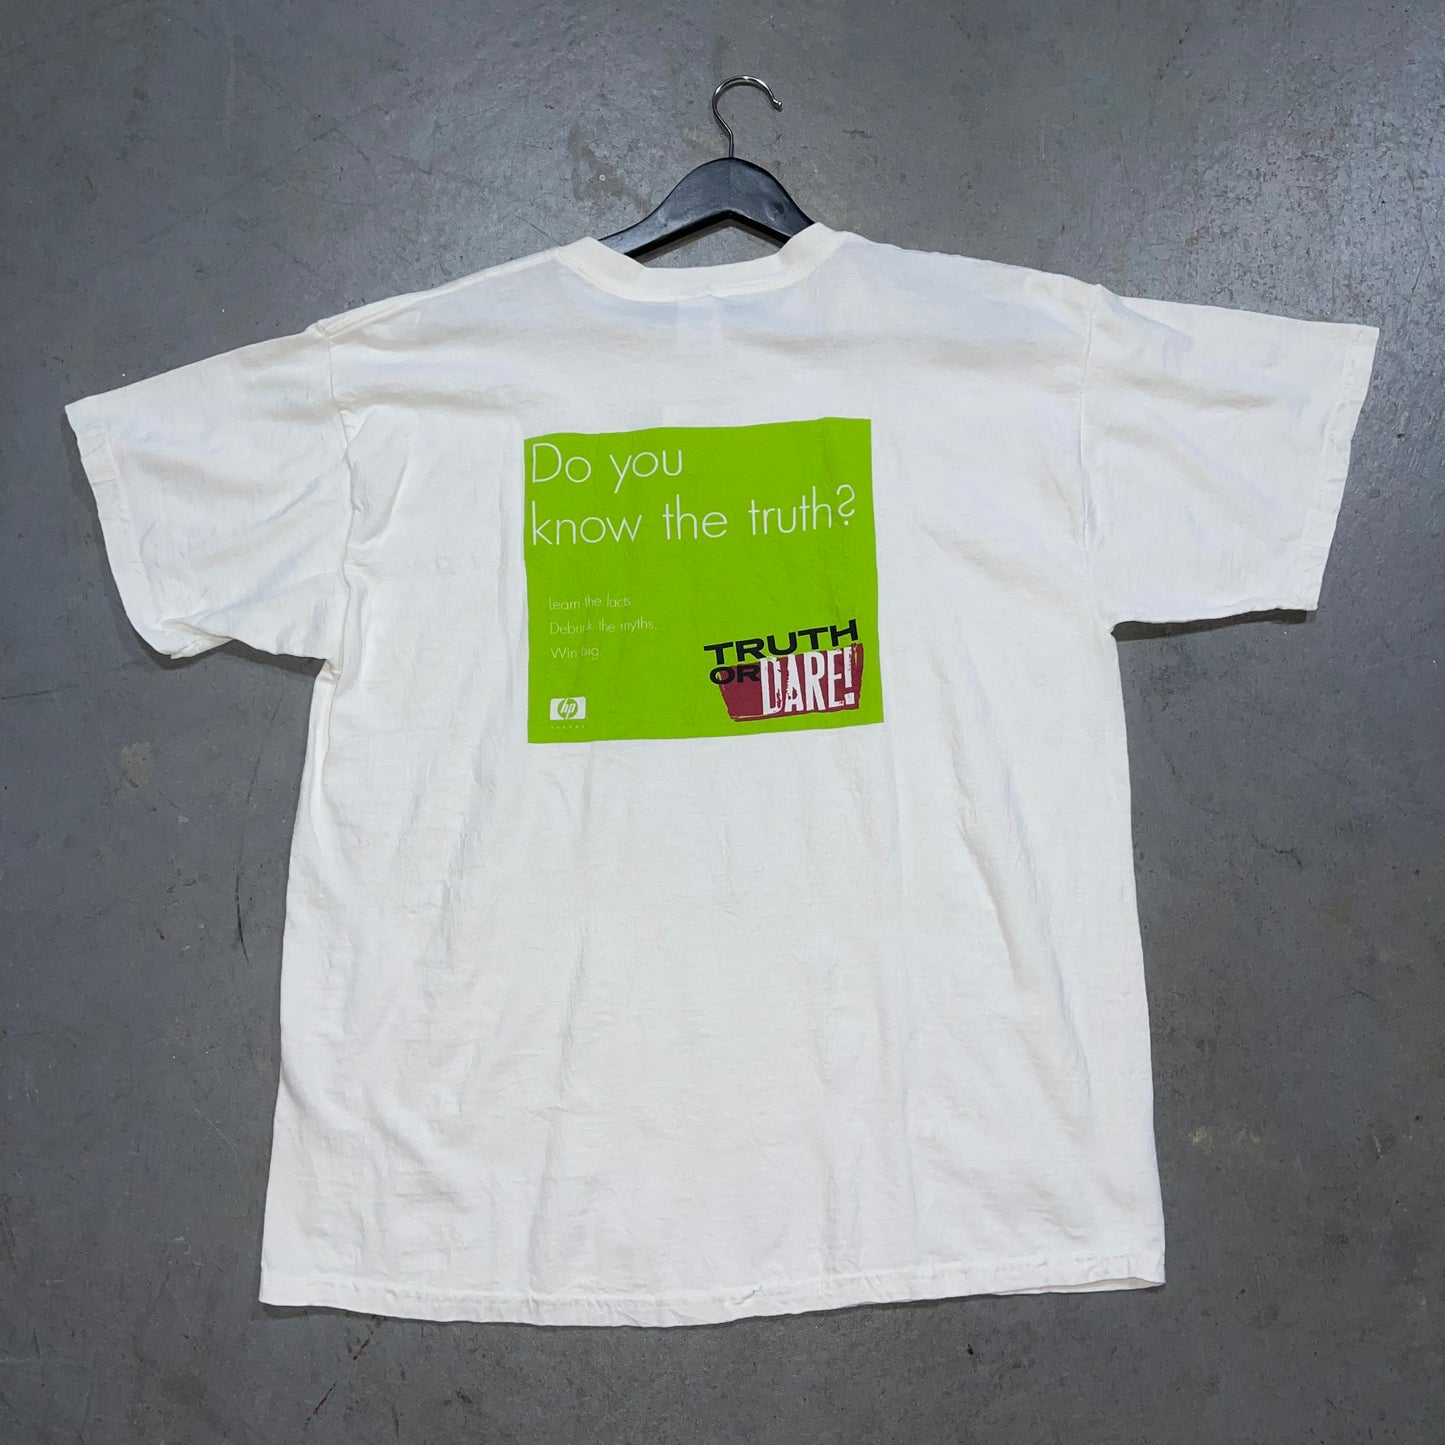 Vintage Hewlett Packard “Truth Or Dare!” T-Shirt. Size XL